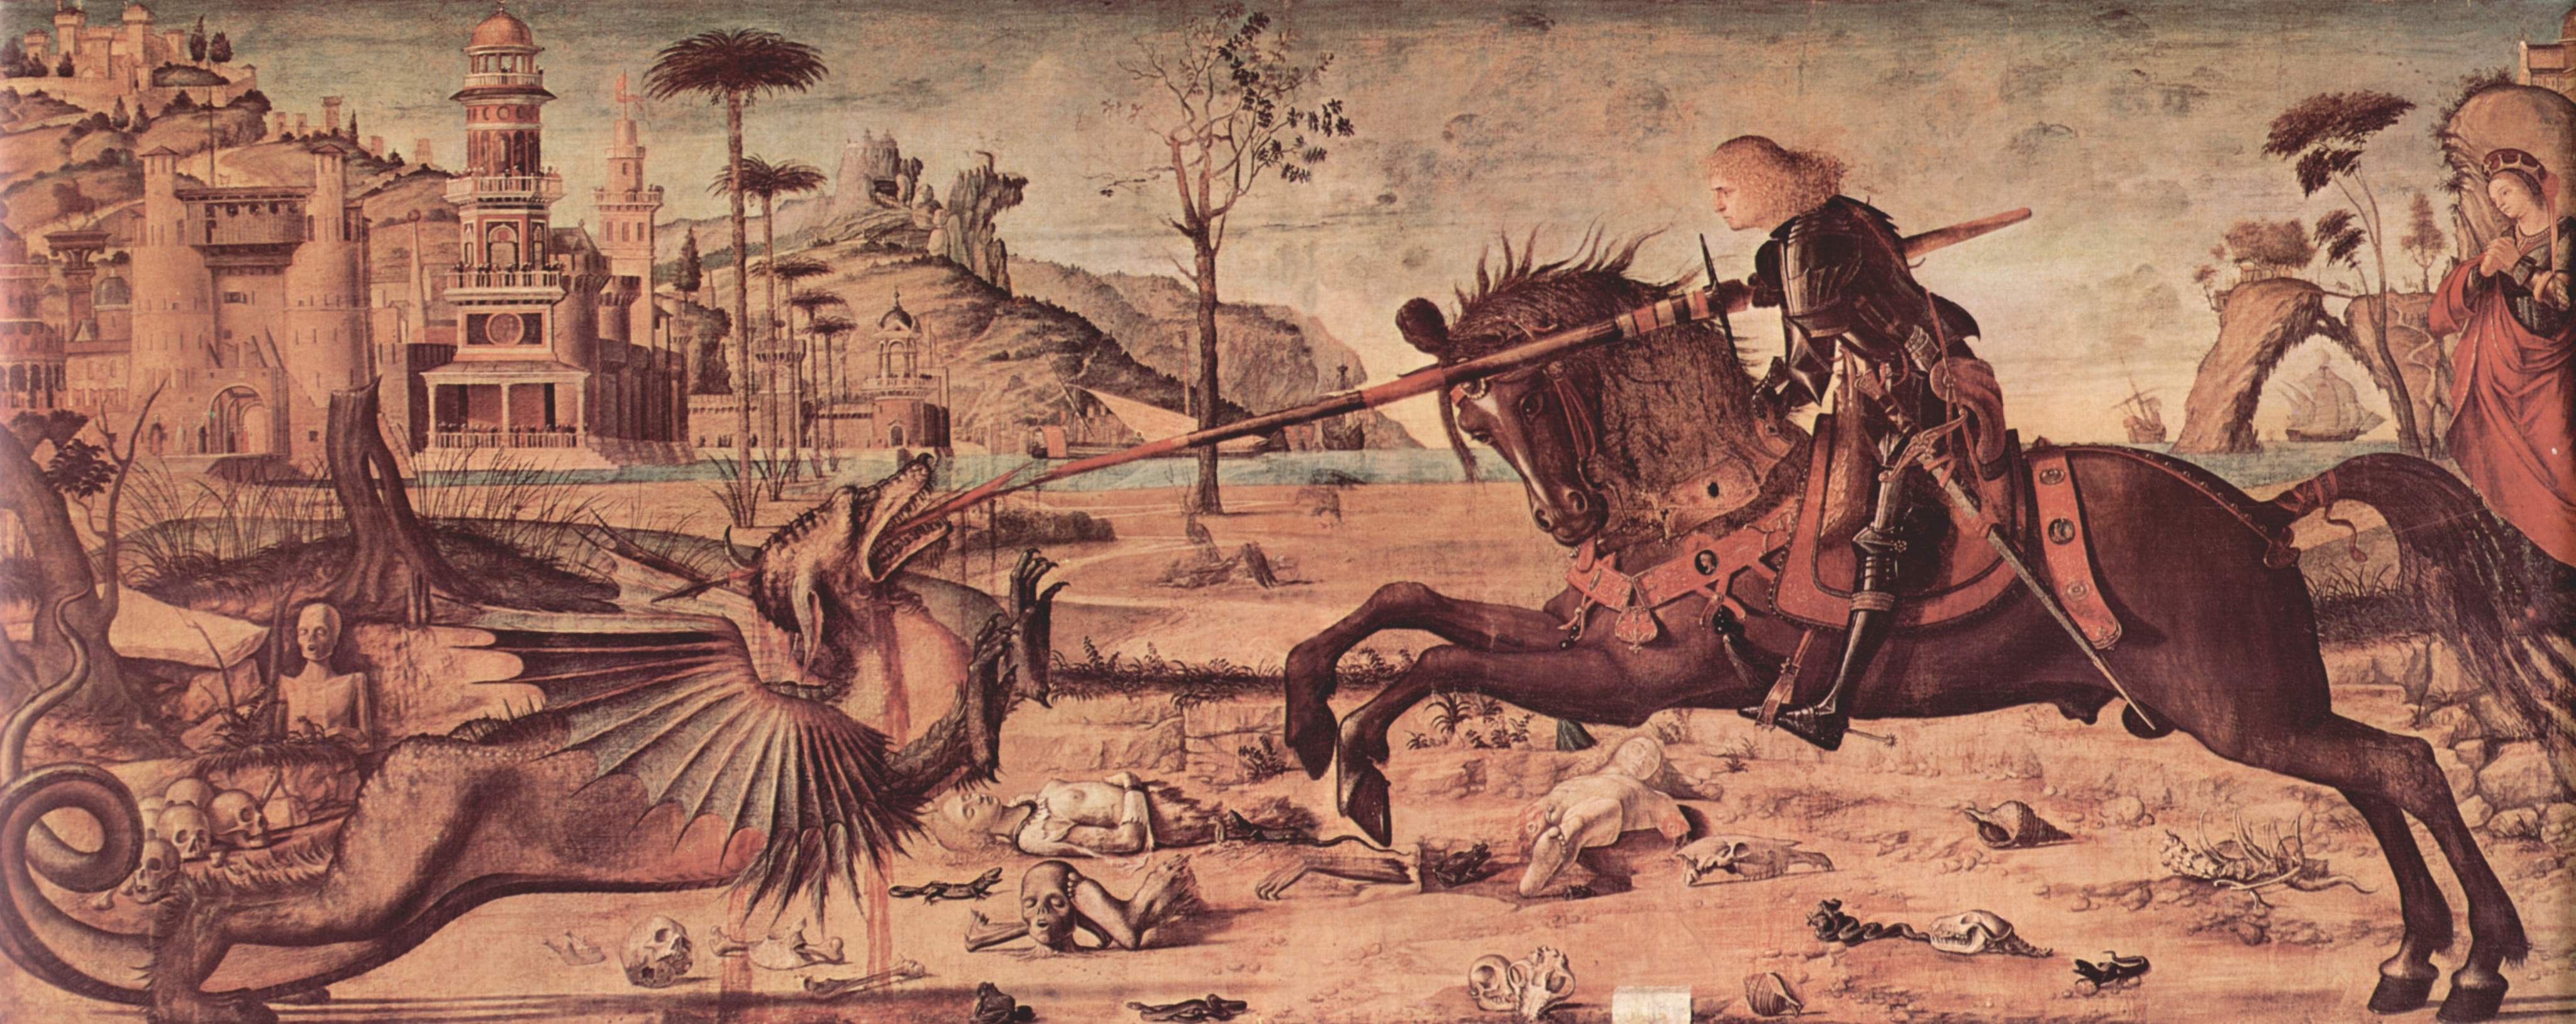 聖喬治與龍 by Vittore Carpaccio - 1502 - 141 x 360 cm 